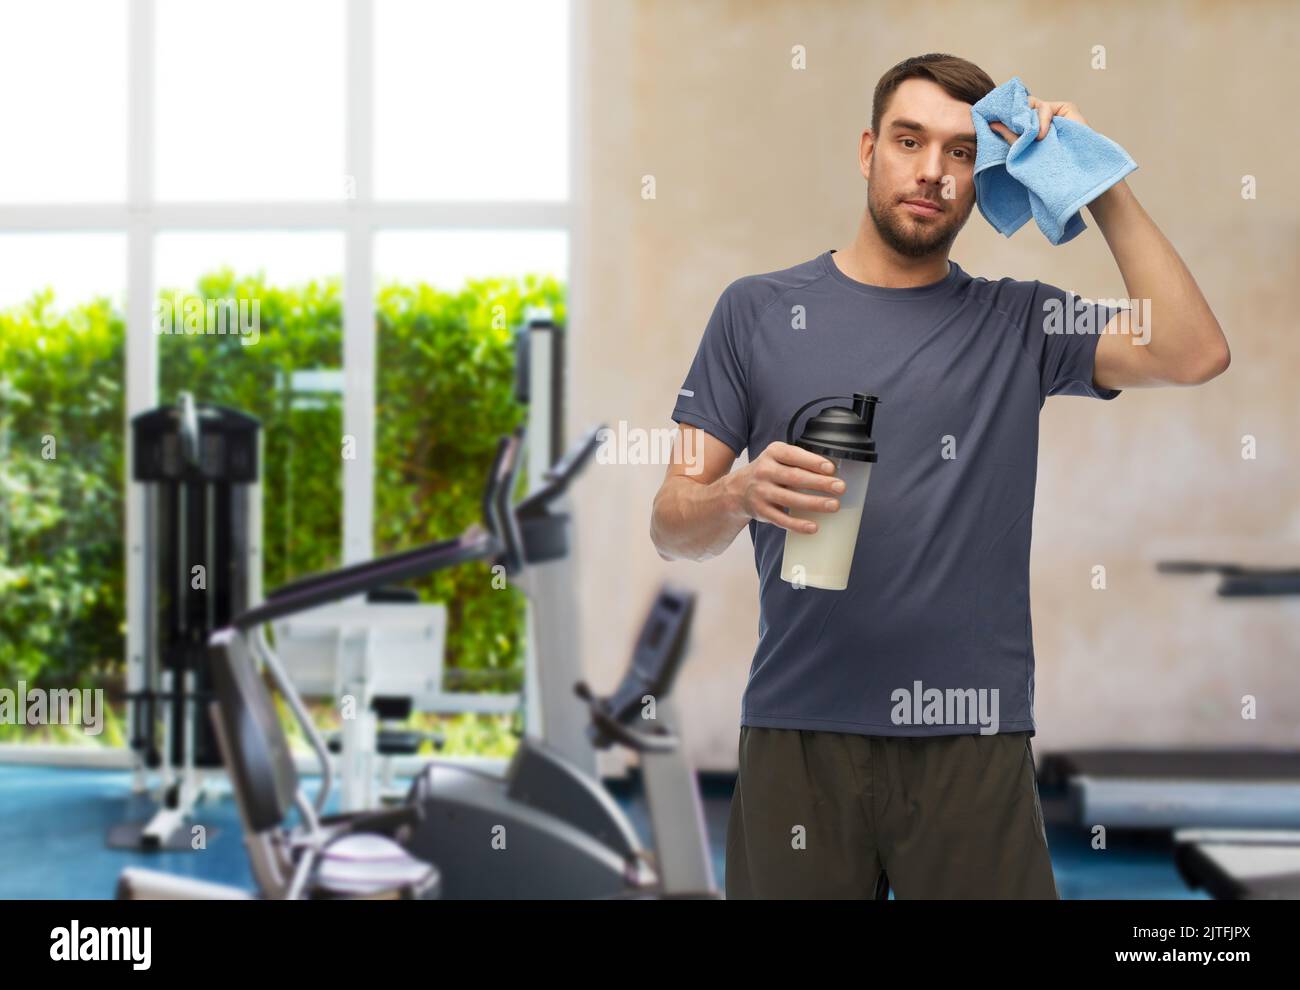 deportivo hombre con toalla en manos rutina de ejercicio gimnasio de cerca  22053427 Foto de stock en Vecteezy